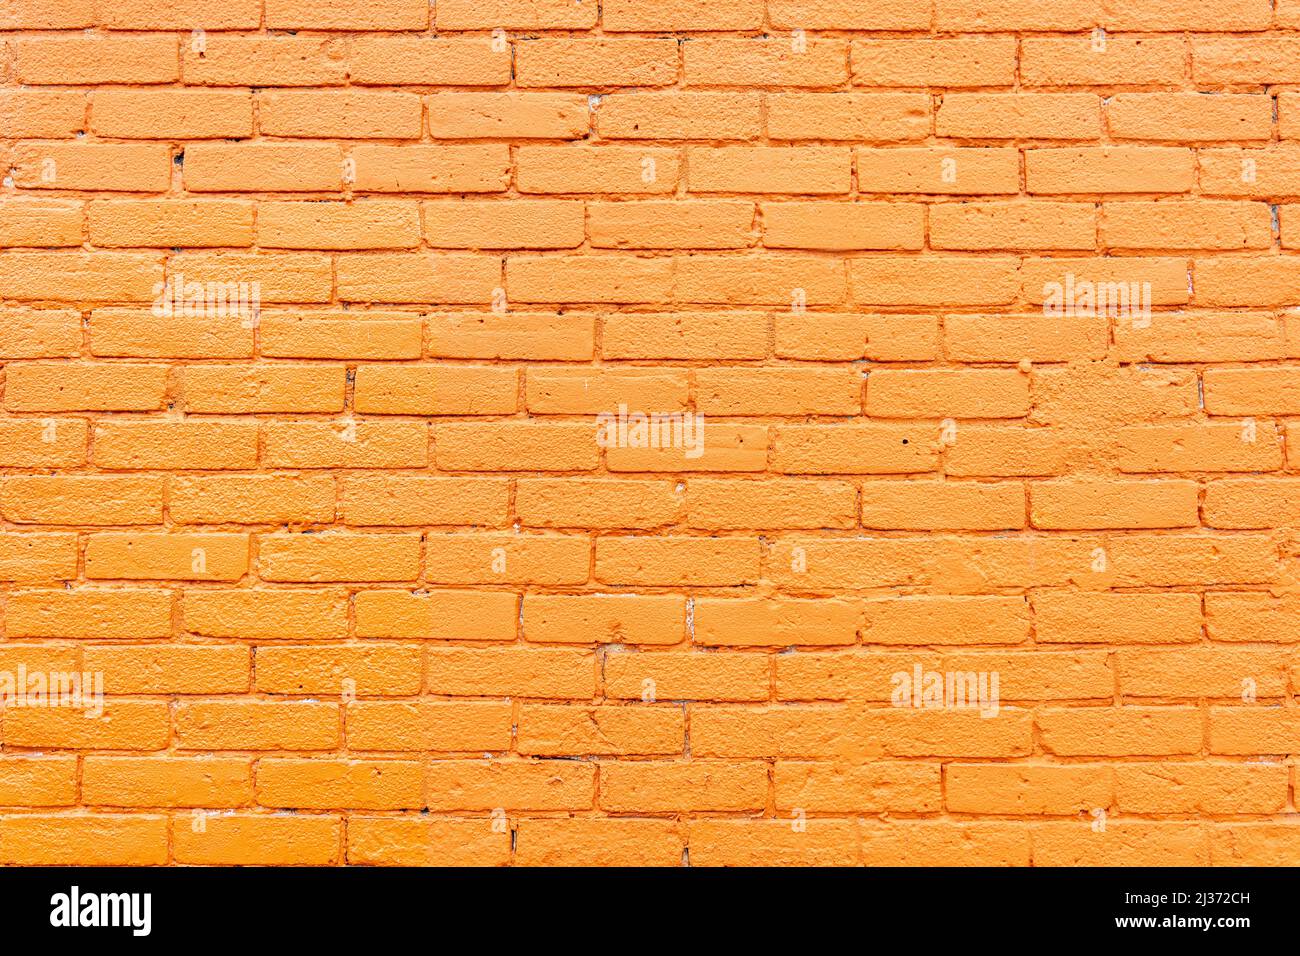 Brick wall full frame image Stock Photo